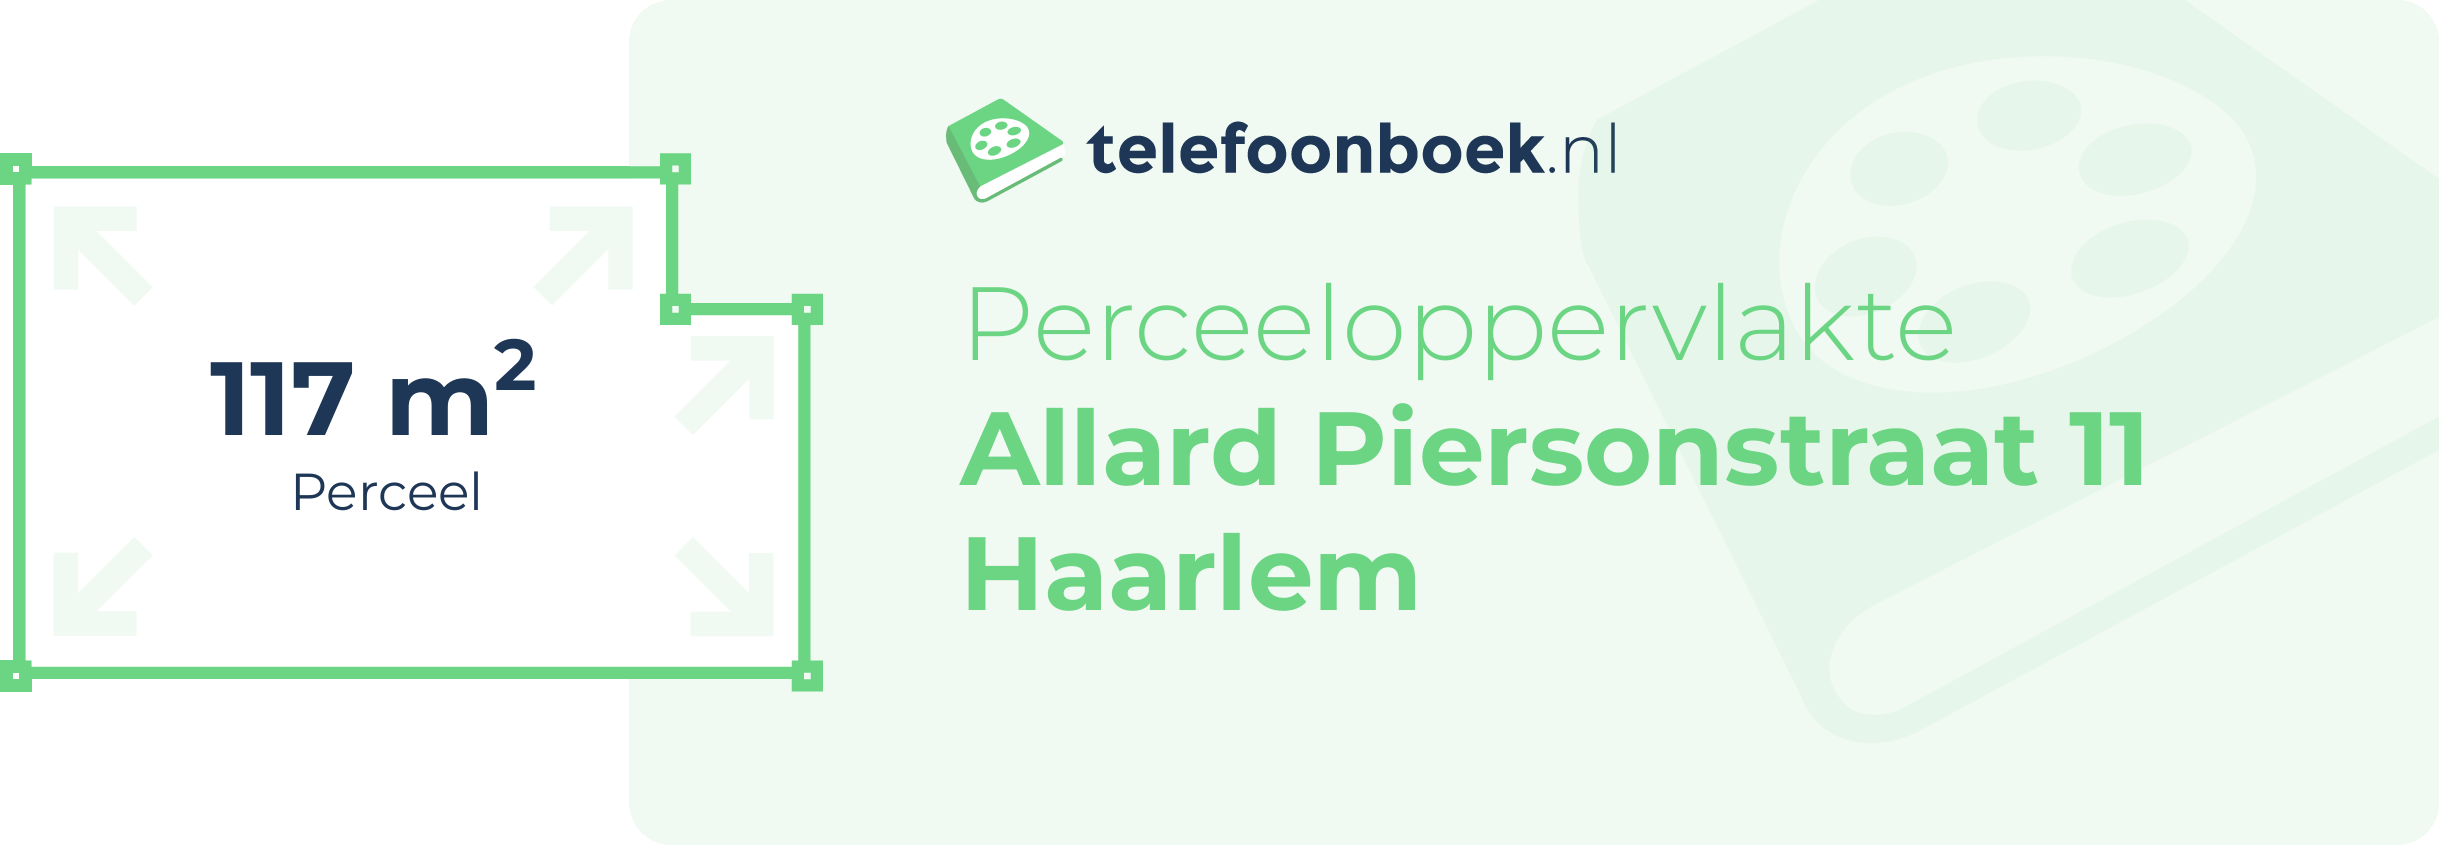 Perceeloppervlakte Allard Piersonstraat 11 Haarlem